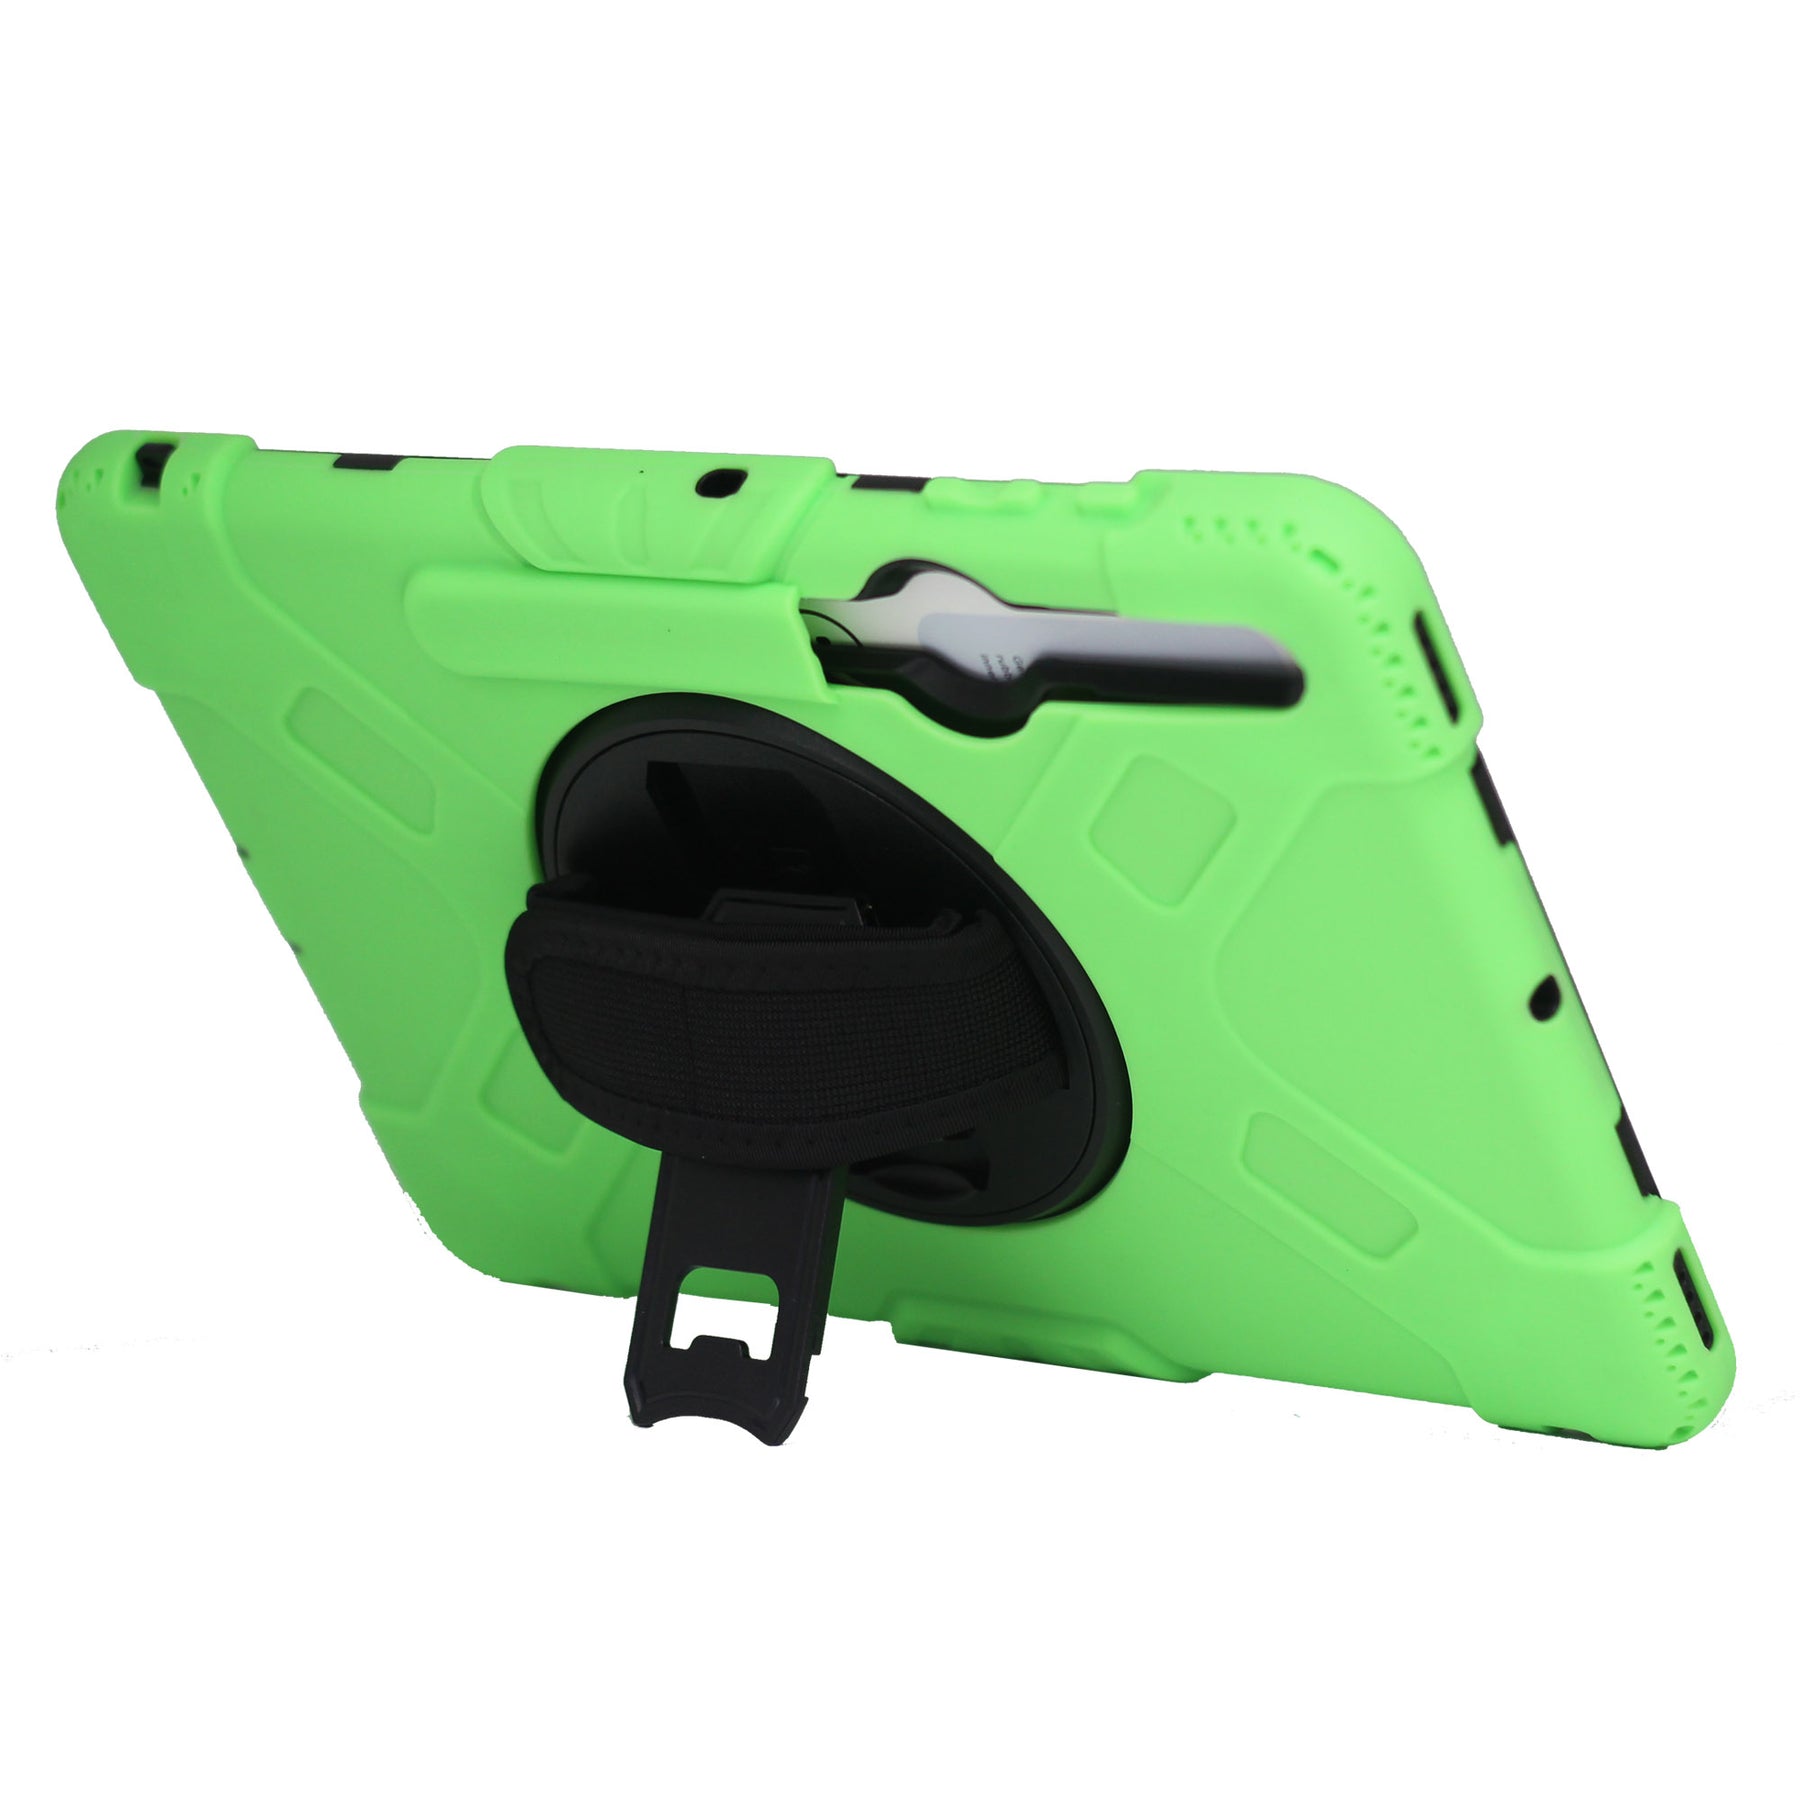 Drop & Shock Samsung S7 FE, T730/T735 Tab Case, Colour Green